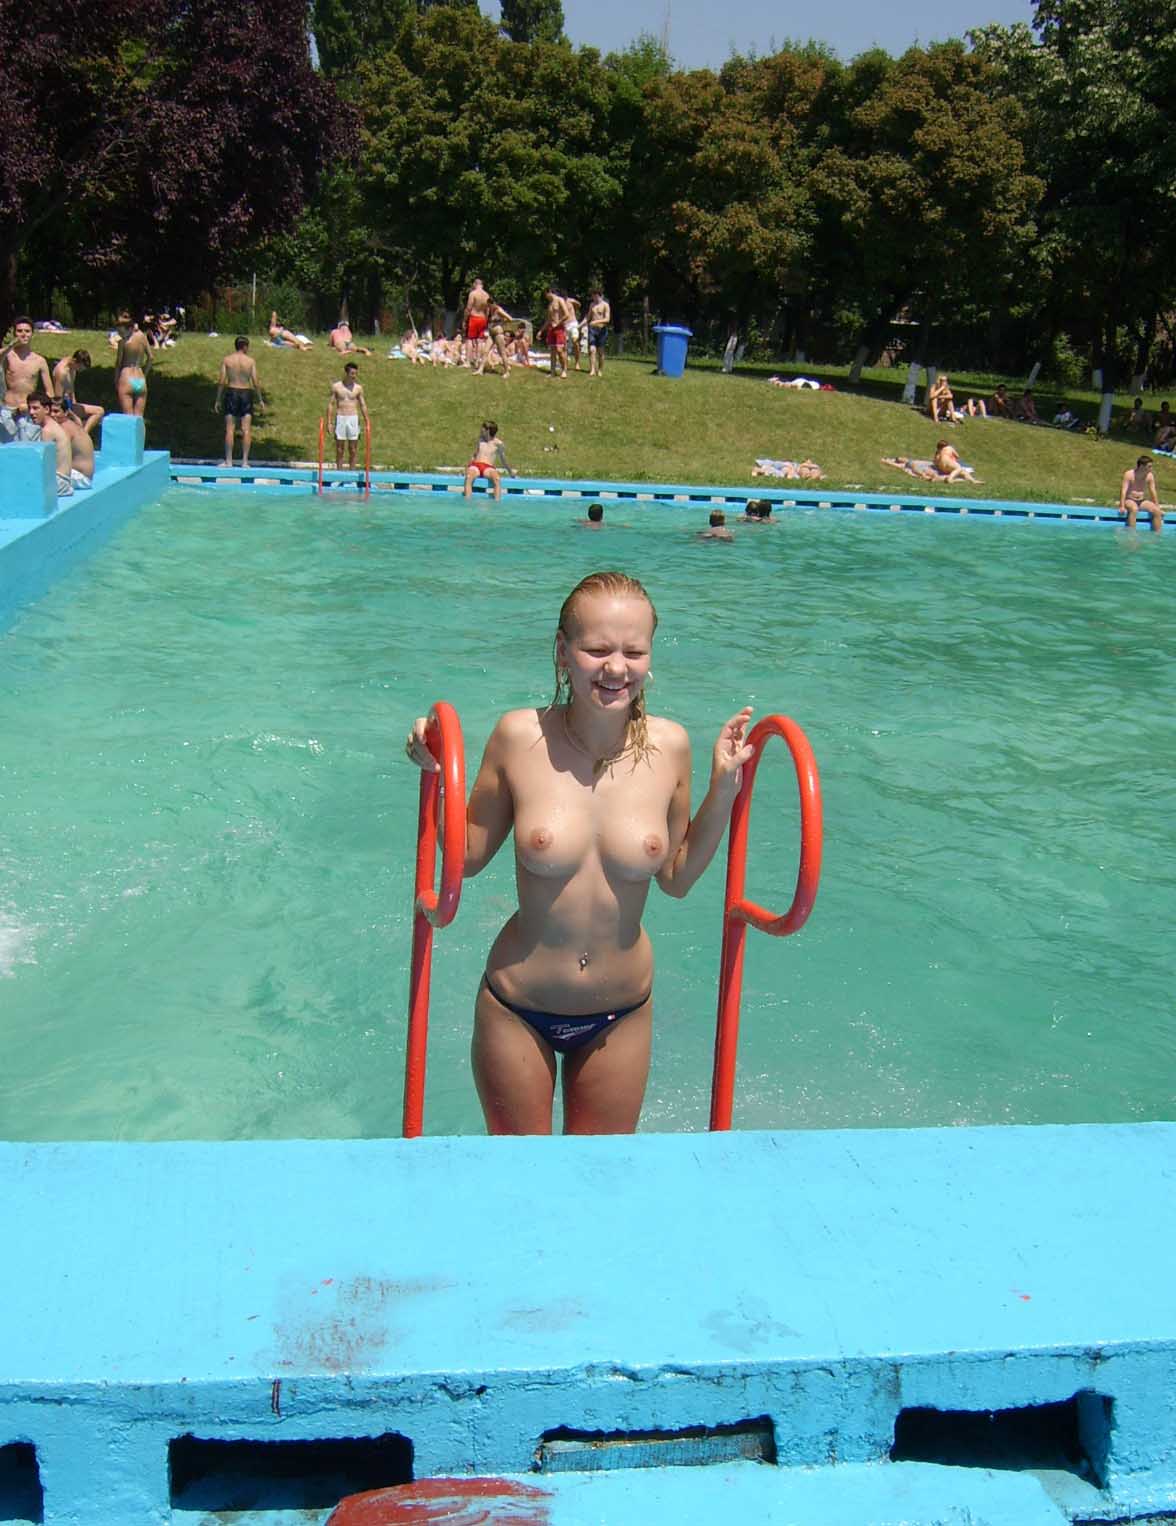 Public pool topless photo